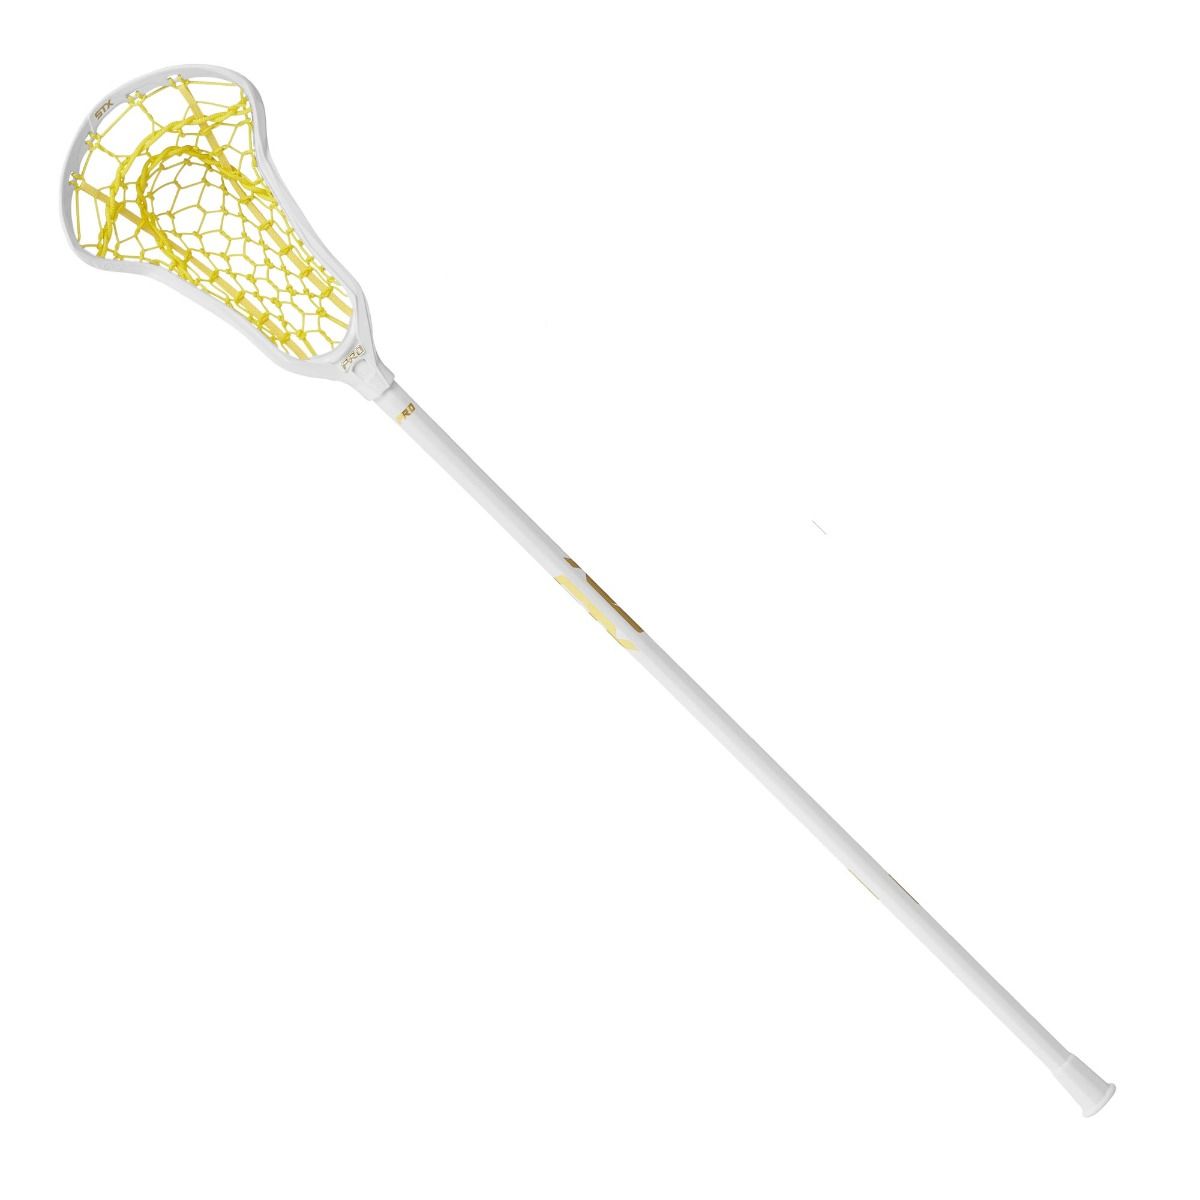 I made two lacrosse sticks : r/lacrosse